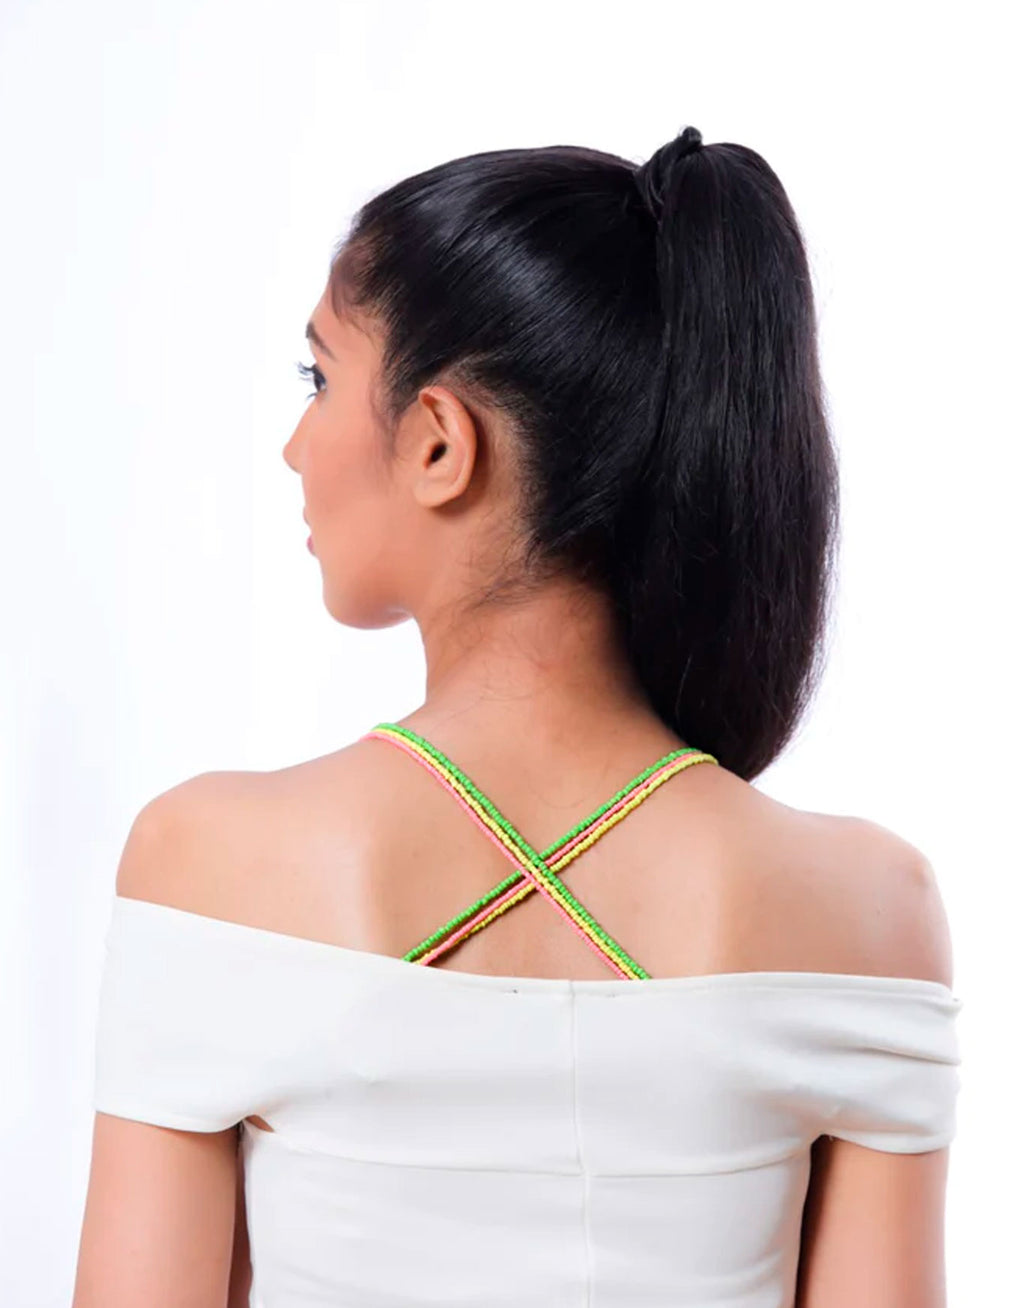 Bra Straps.com Online Store: Evolution bra, Beaded bra straps, Jewelery bra  straps, Clear bra straps by Margarita Couture